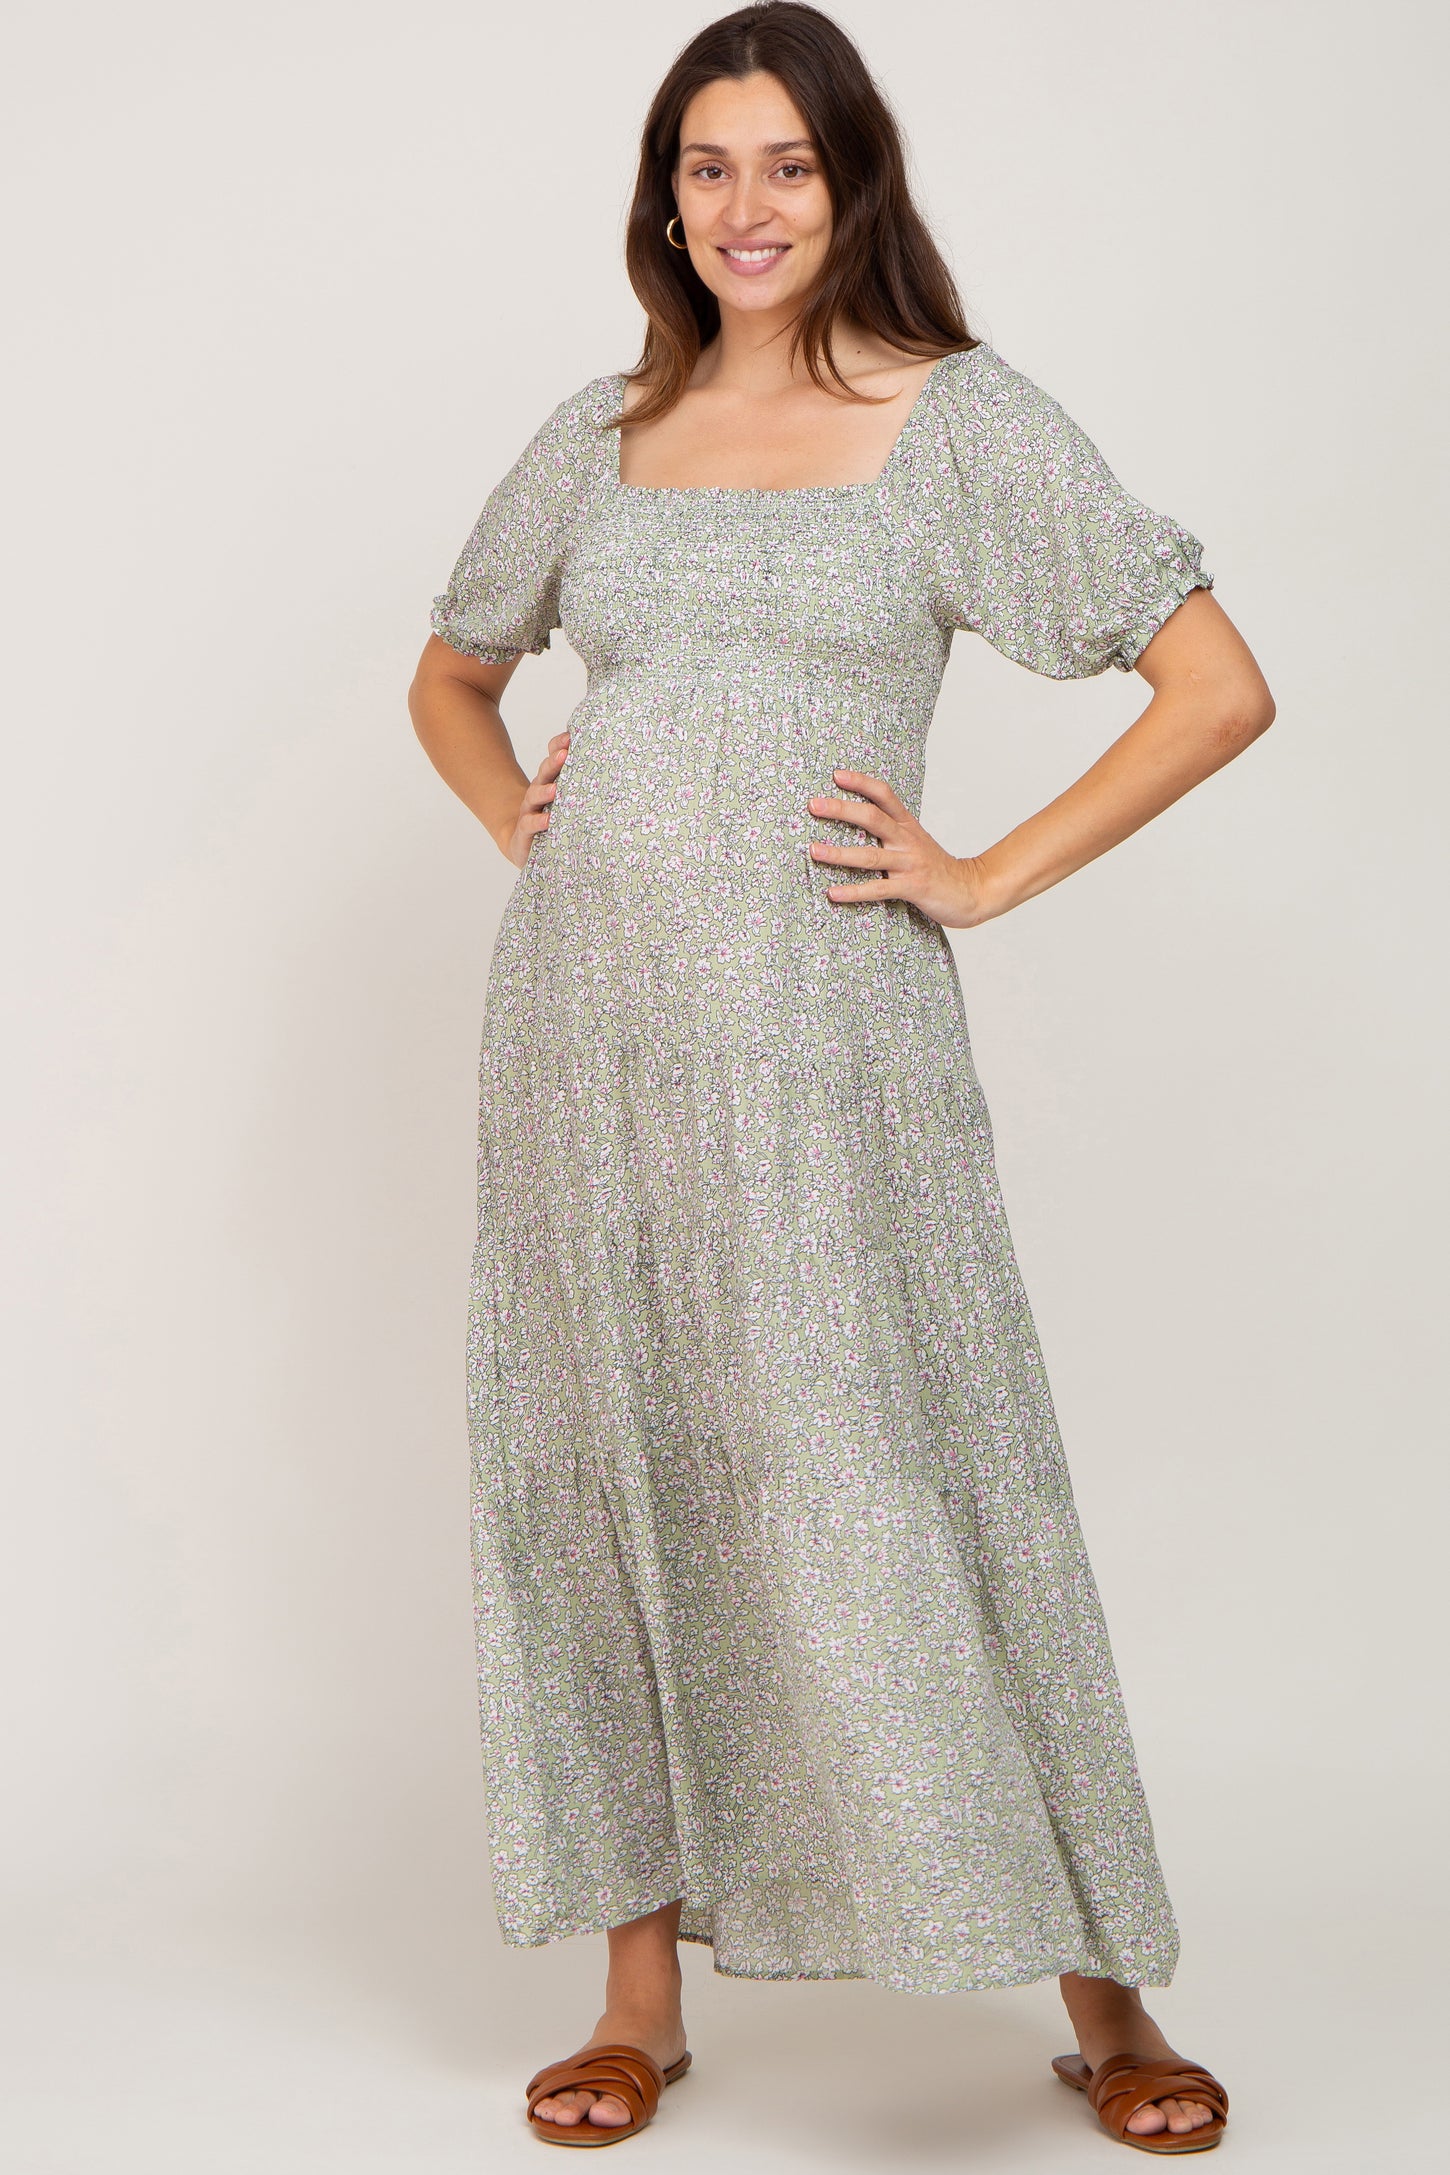 Light Olive Floral Square Neckline Maternity Maxi Dress– PinkBlush